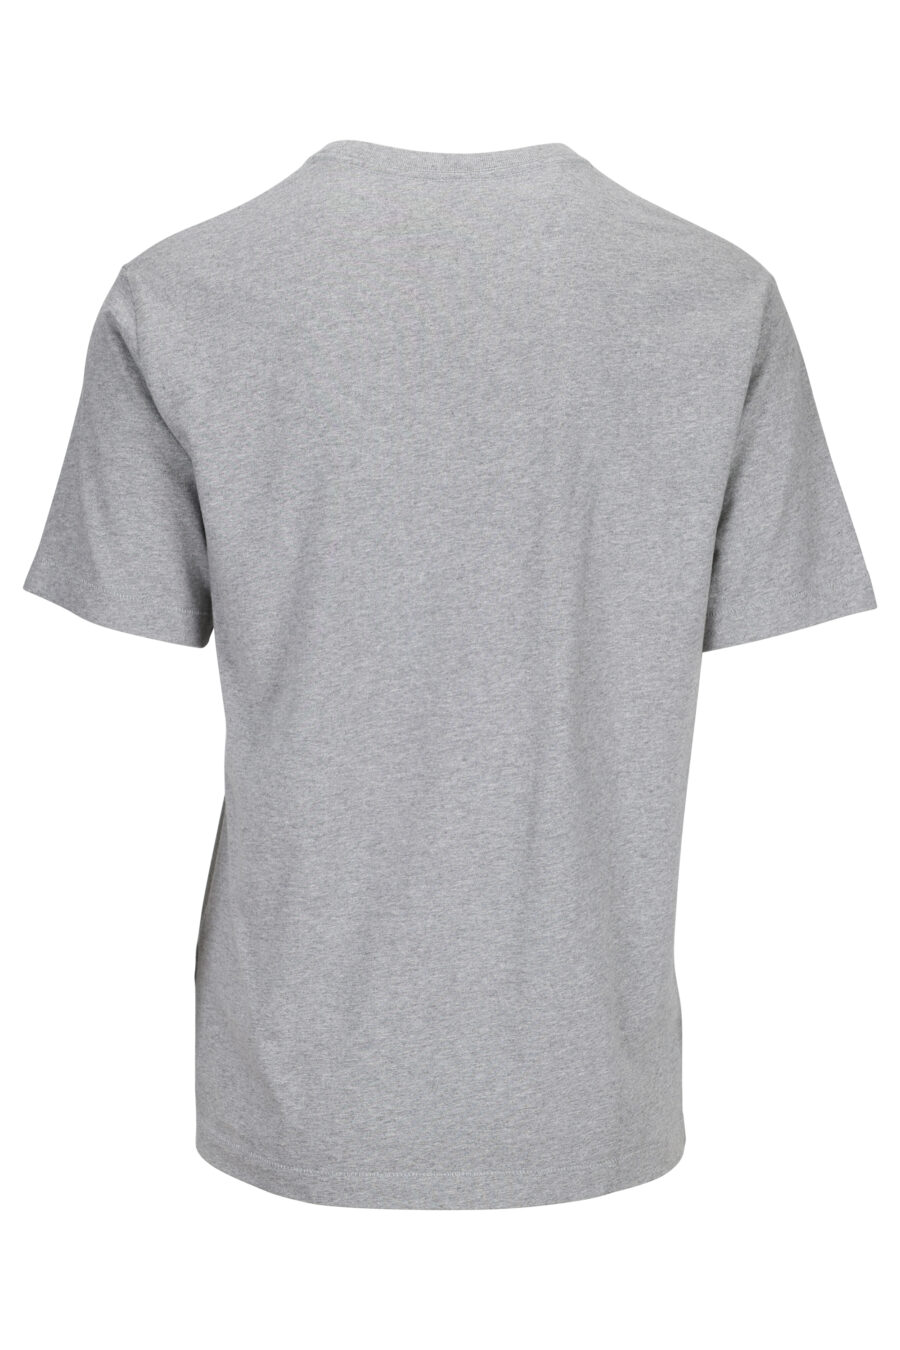 T-shirt gris avec logo "kenzo academy" - 3612230545502 1